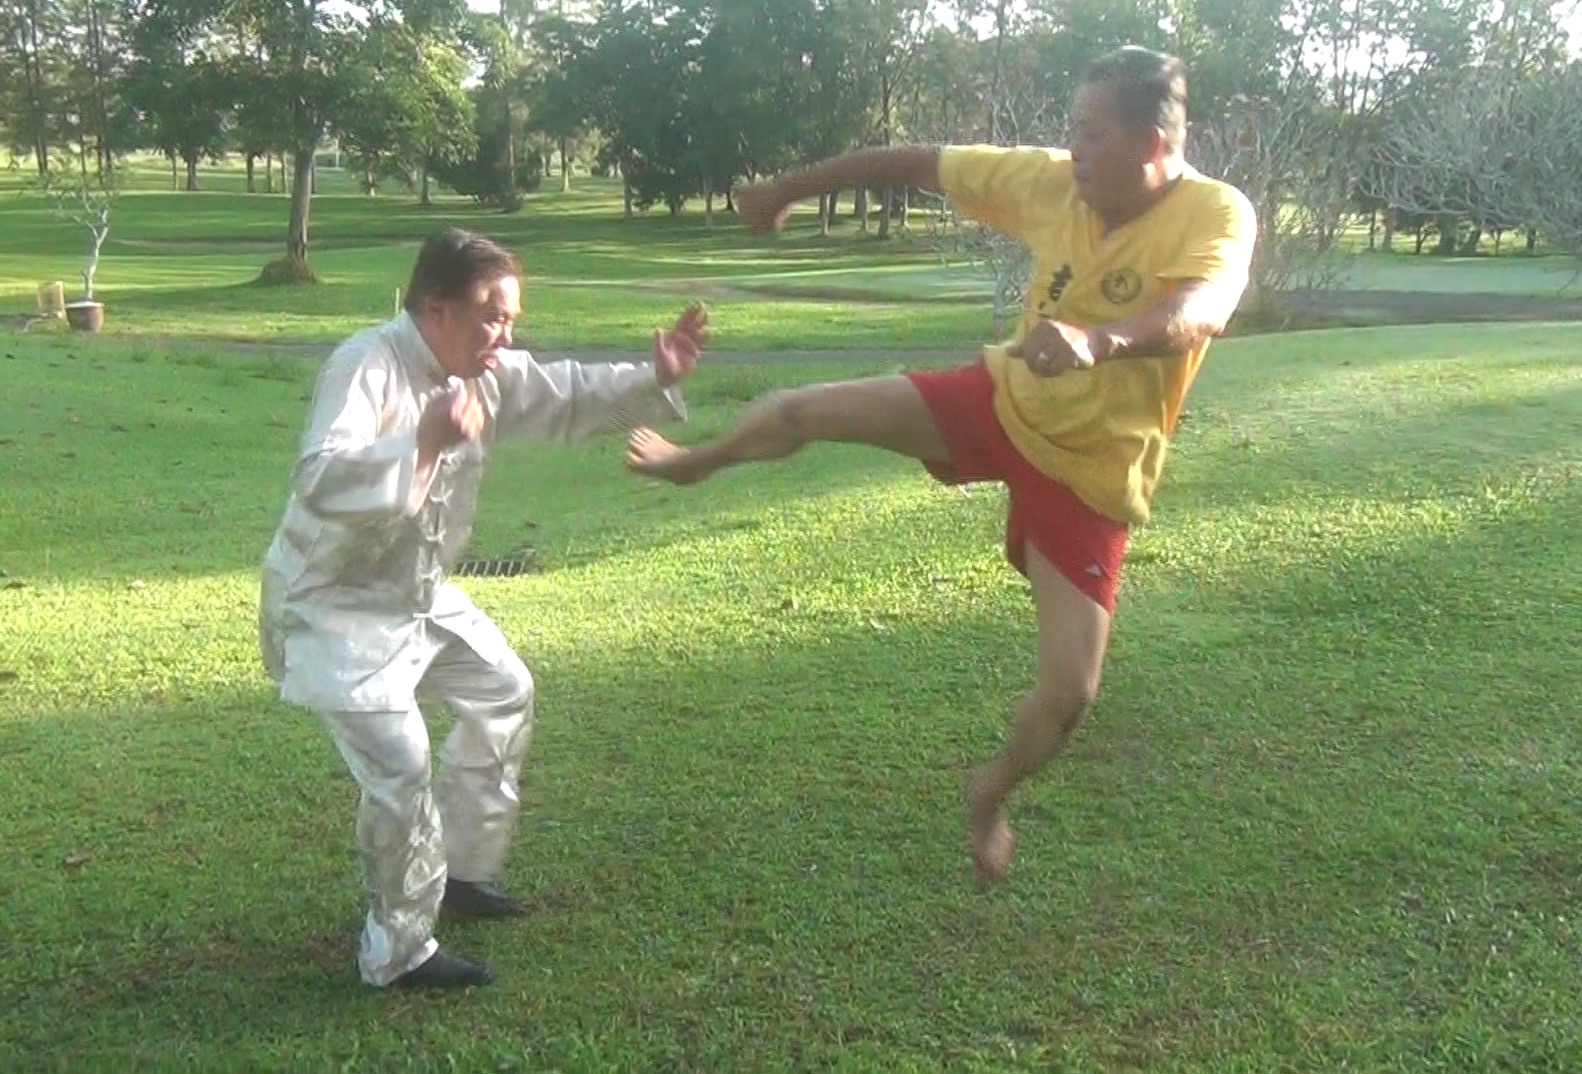 Shaolin against Muay Thai